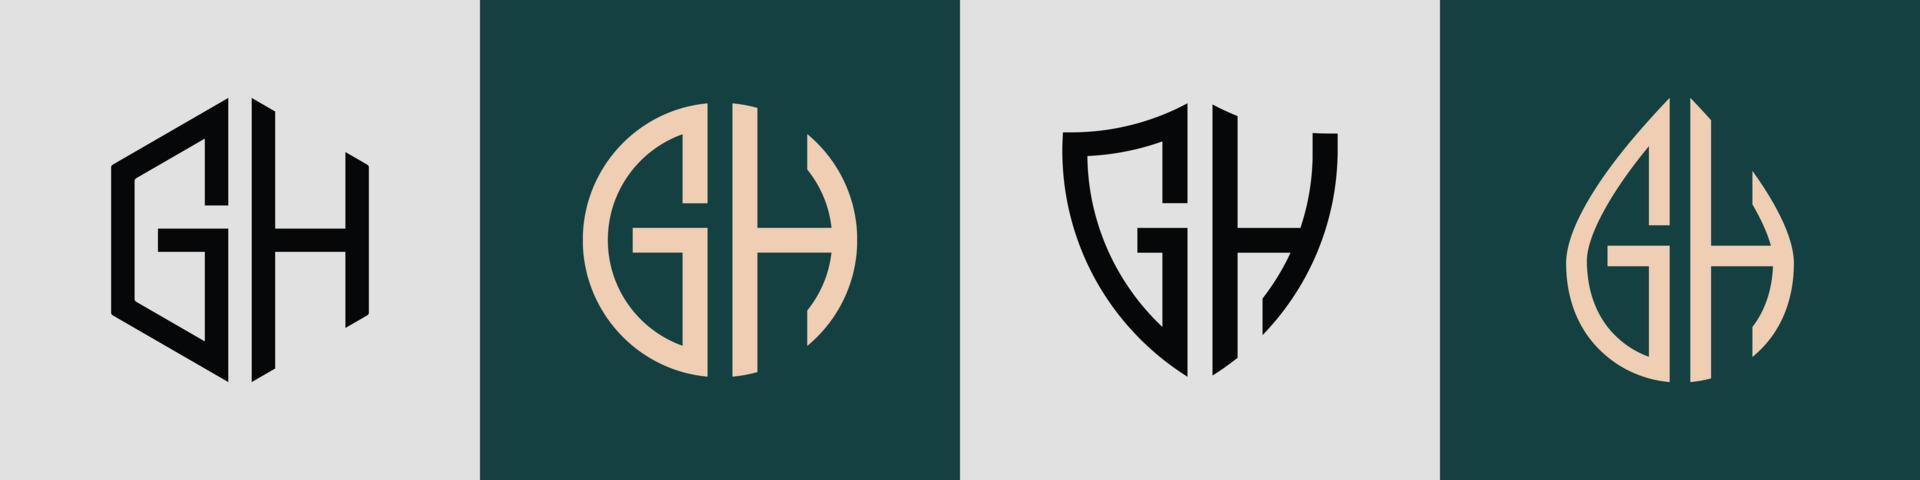 kreativ einfach Initiale Briefe gh Logo Designs bündeln. vektor